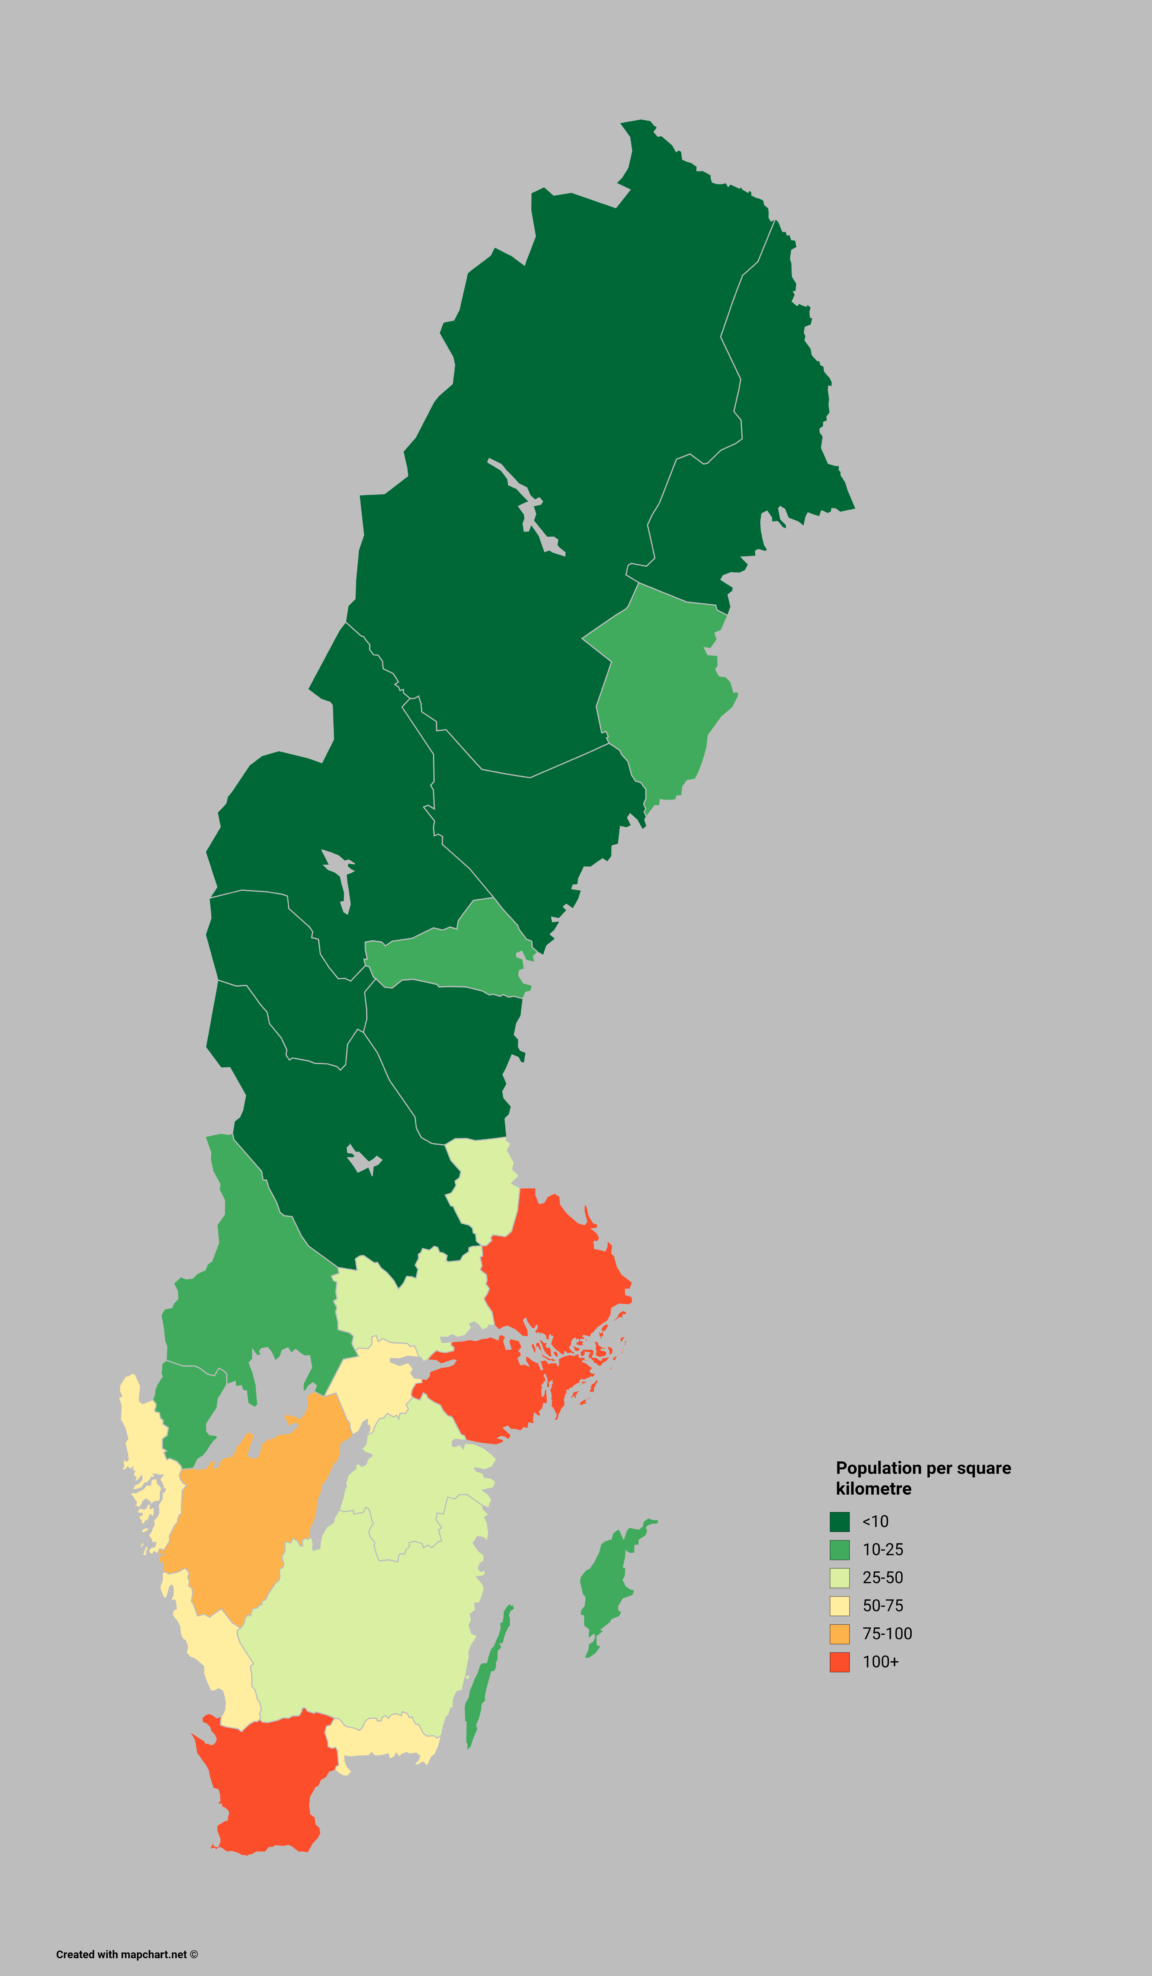 Map Population density of Sweden Infographic.tv Number one